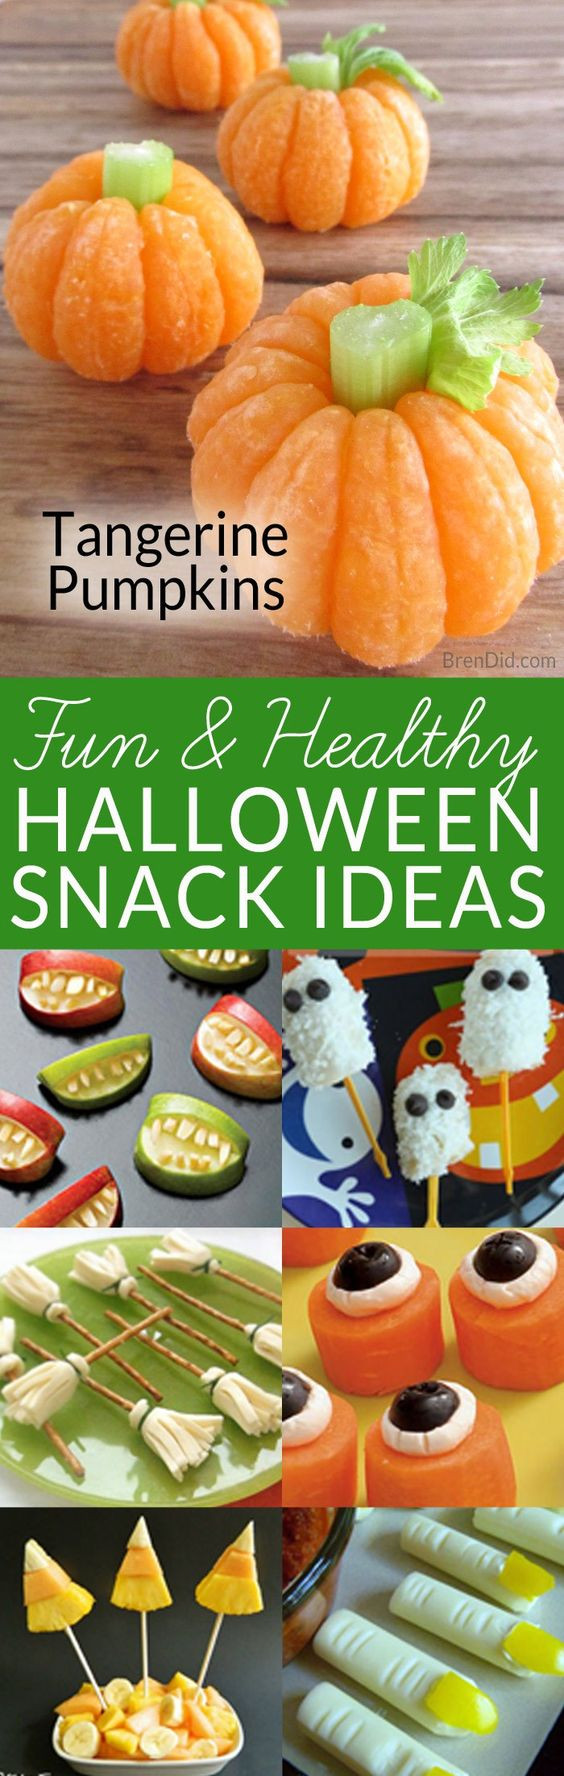 Make Preschool Halloween Party Healthy Food Ideas
 Tangerine Pumpkins & 8 Other Healthy Halloween Snacks